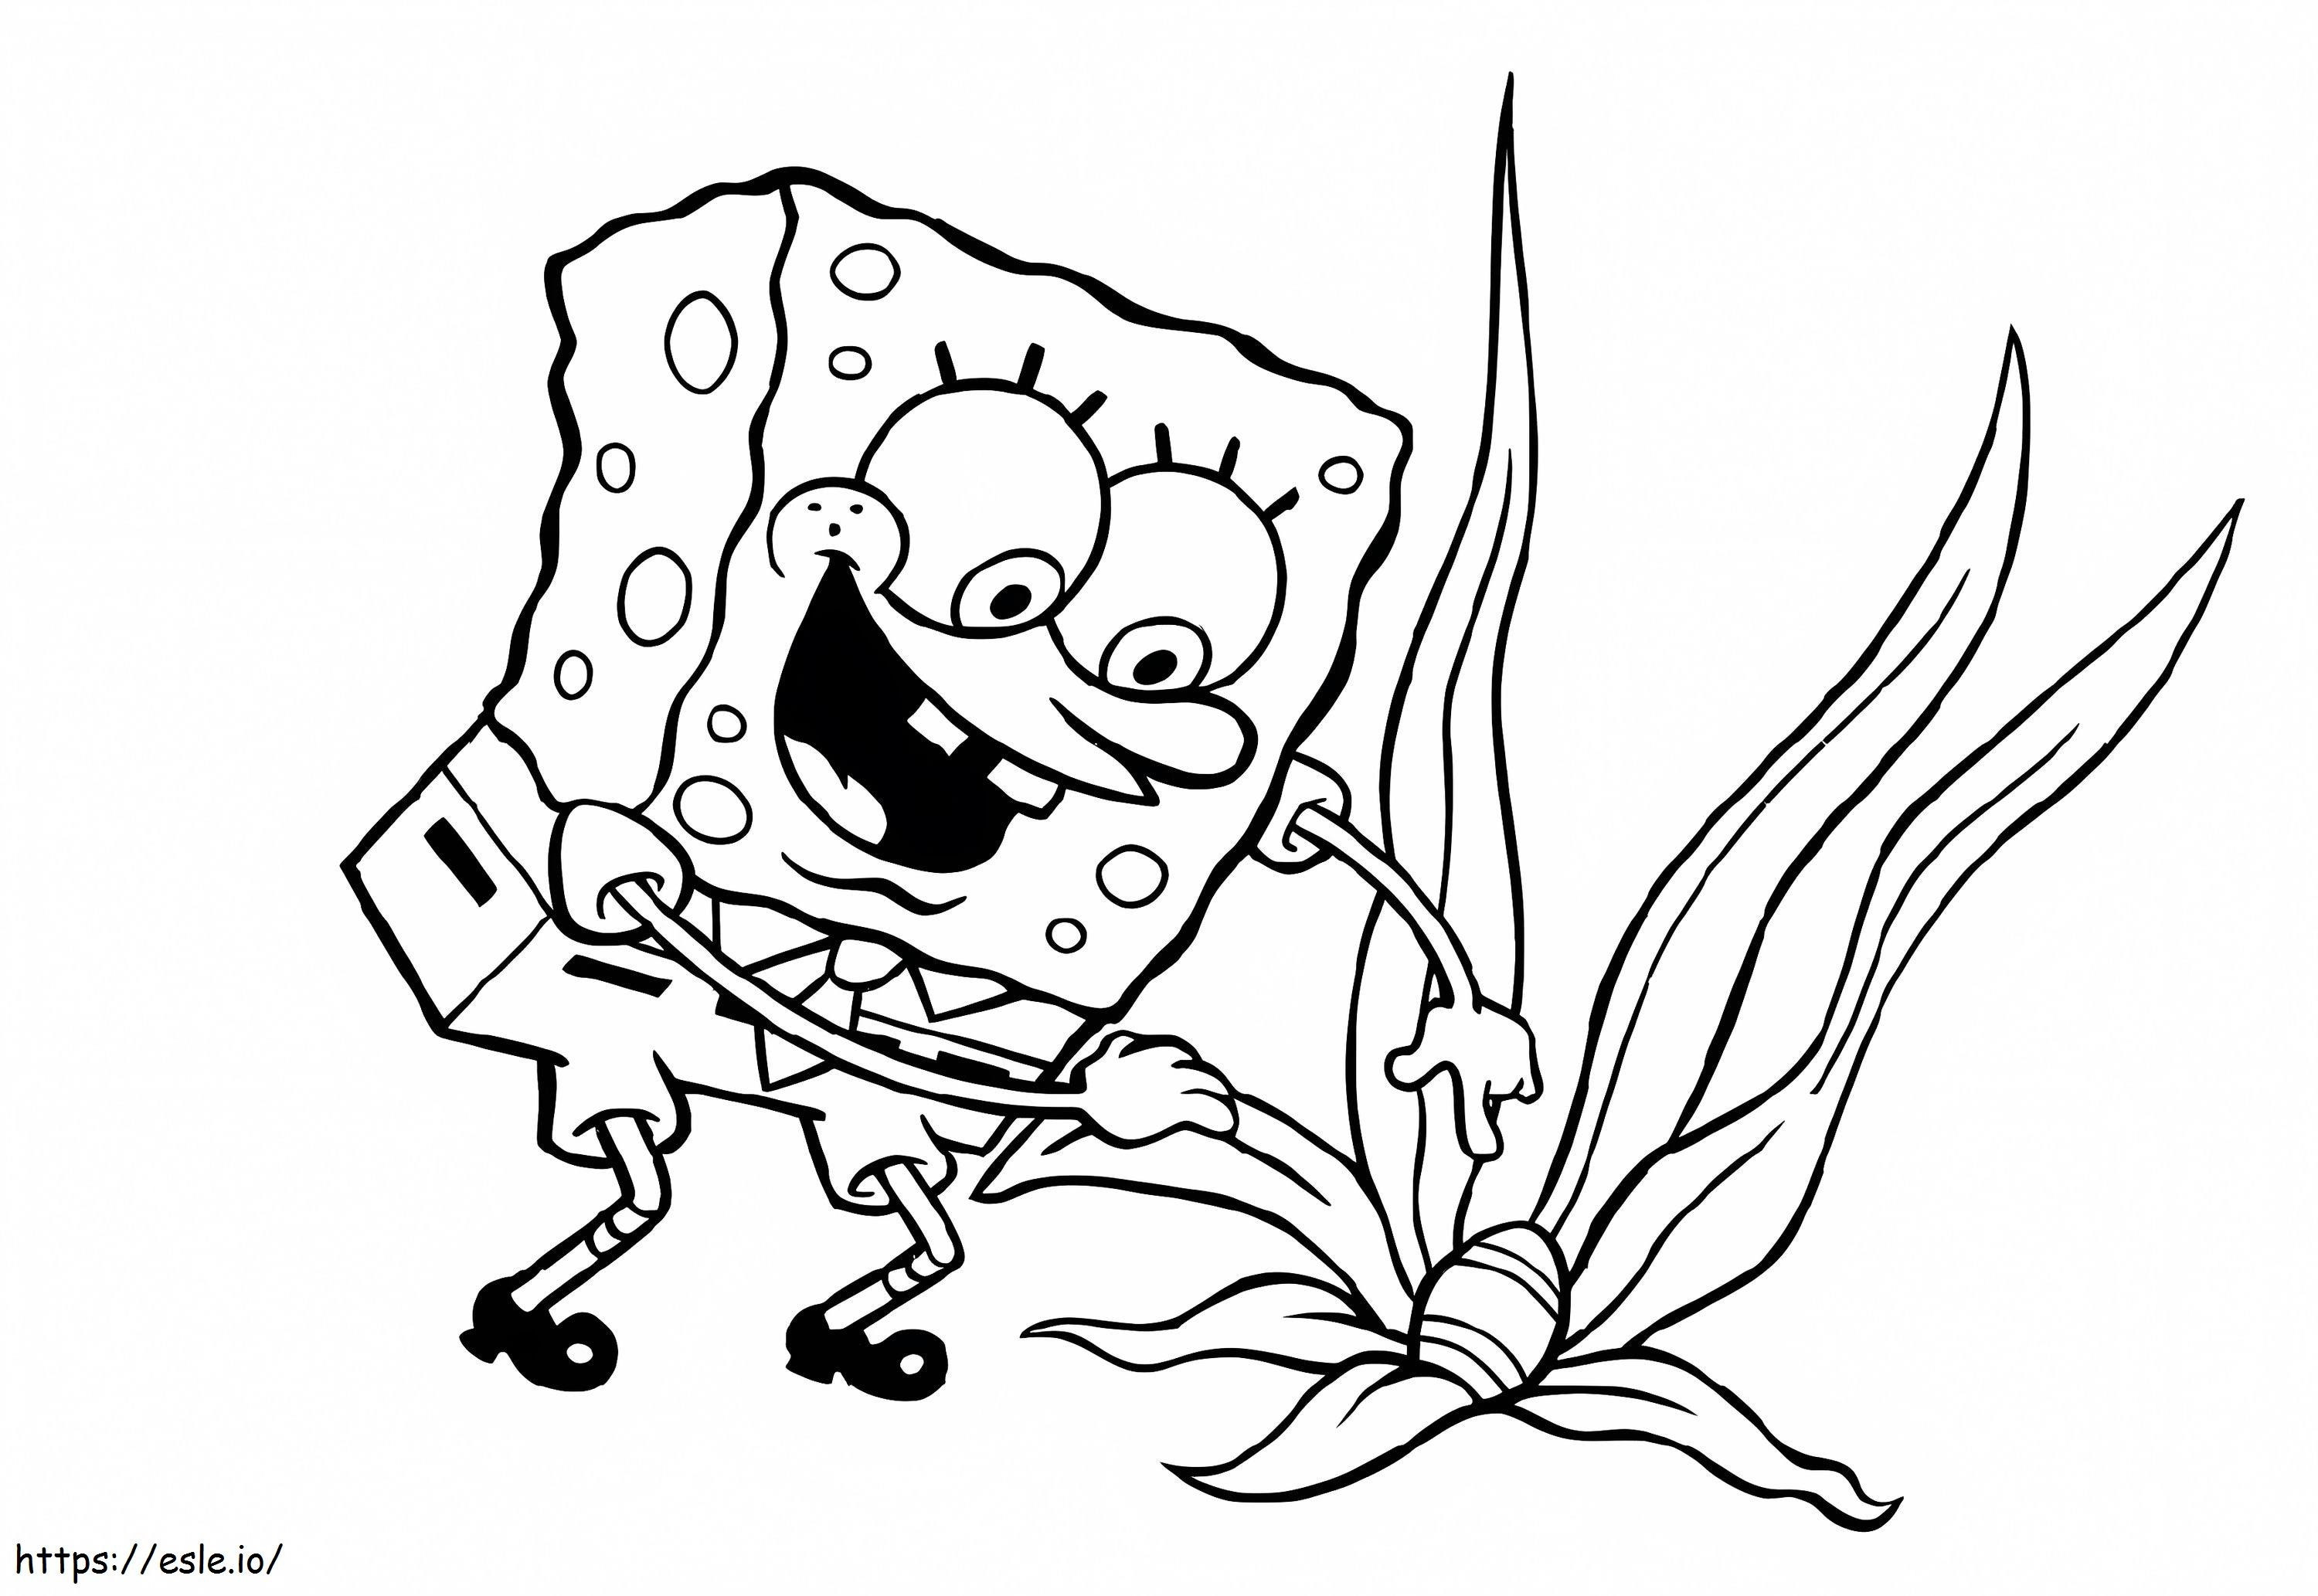 Spongebob I Jajko kolorowanka